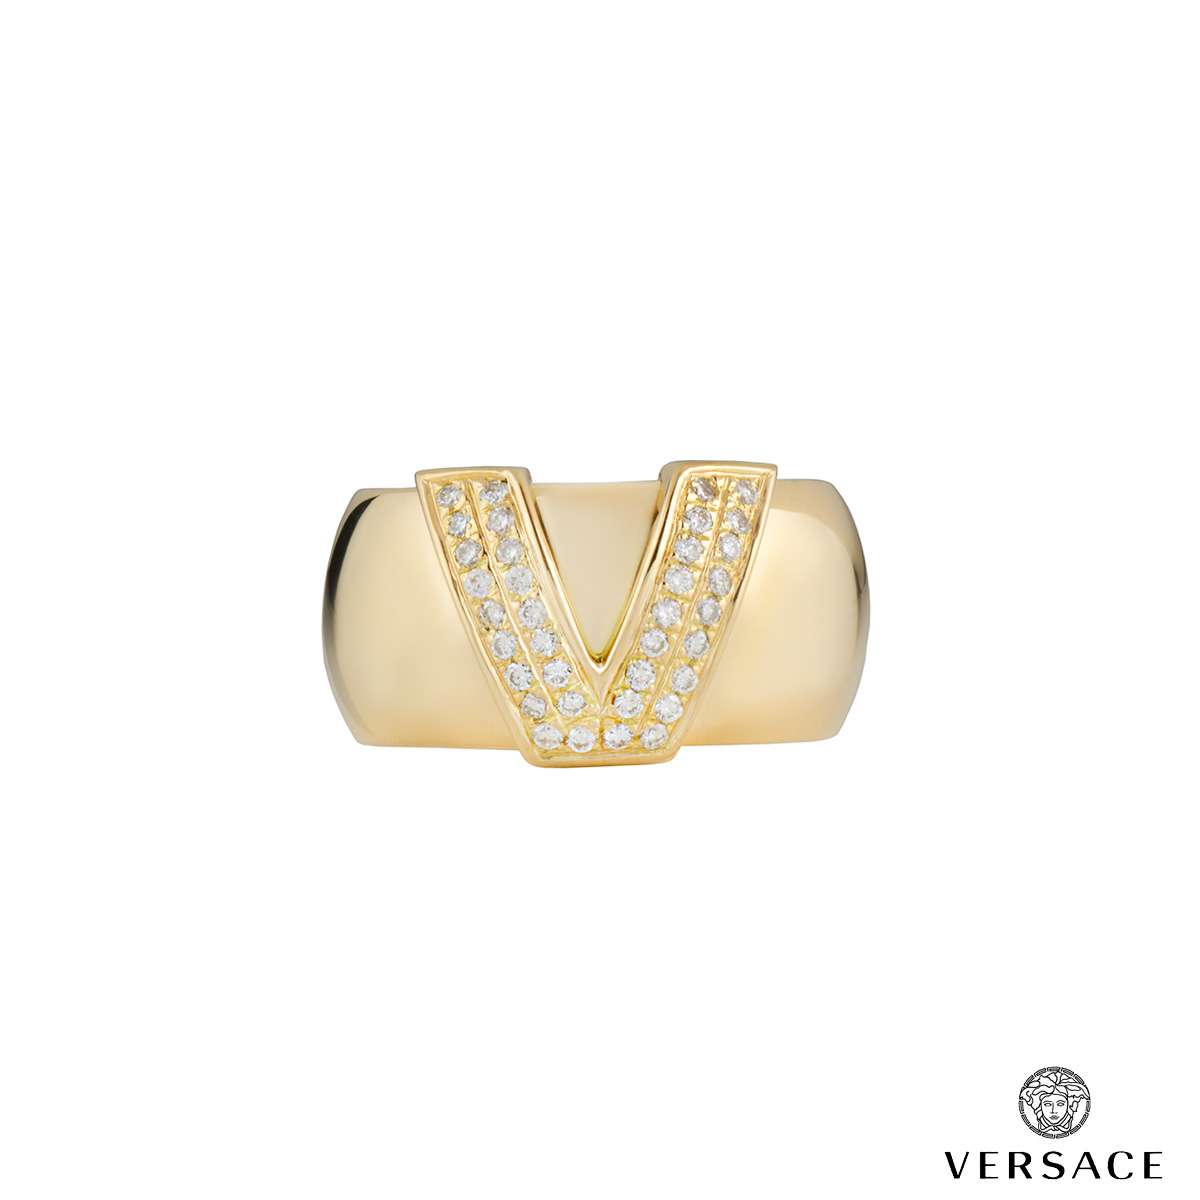 Versace 18k Yellow Gold Ring Rich Diamonds